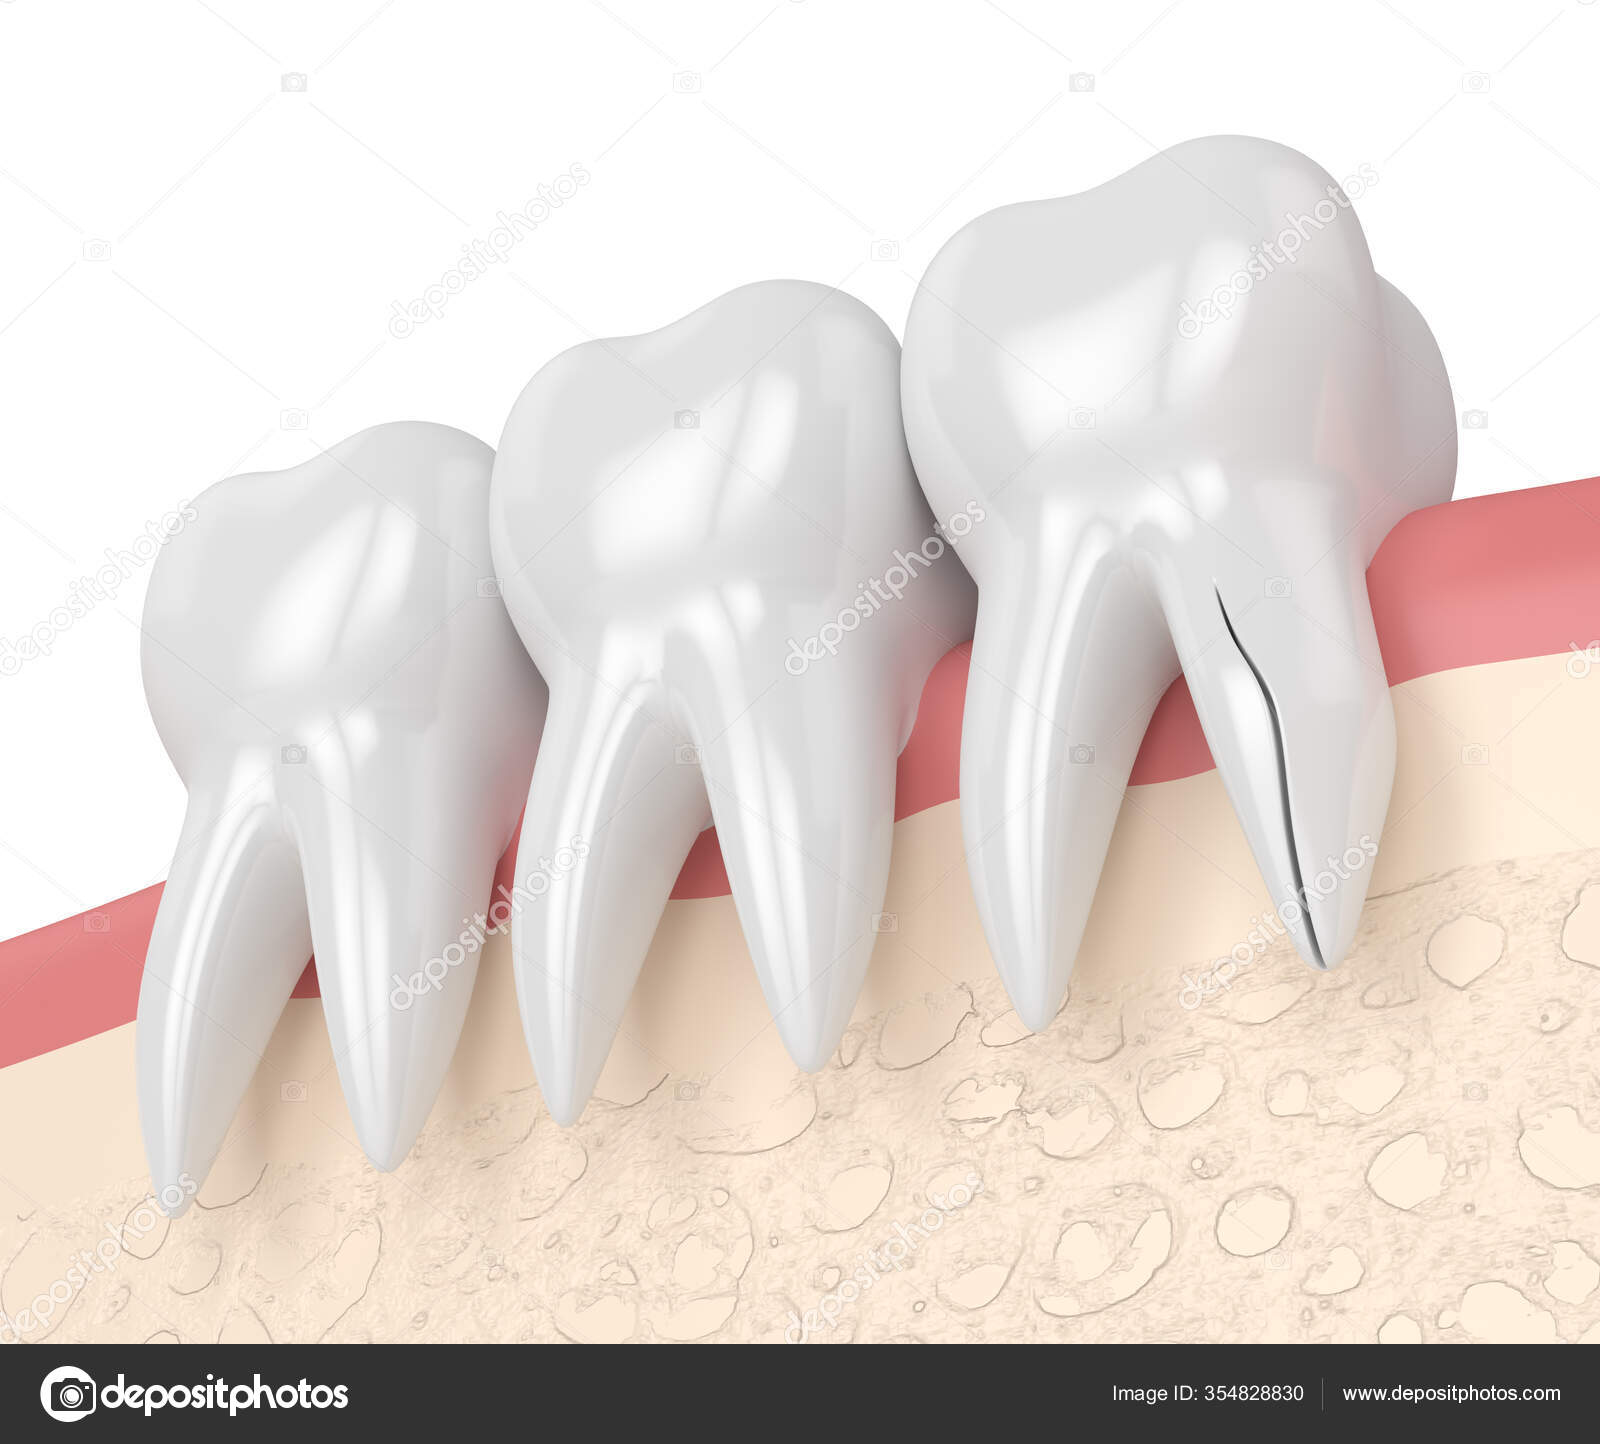 30ml Resin Temporary Tooth Repair Granules Teeth Gaps Missing Broken Tooth  False Teeth Filling Moldable Solid Glue Dental Care - AliExpress